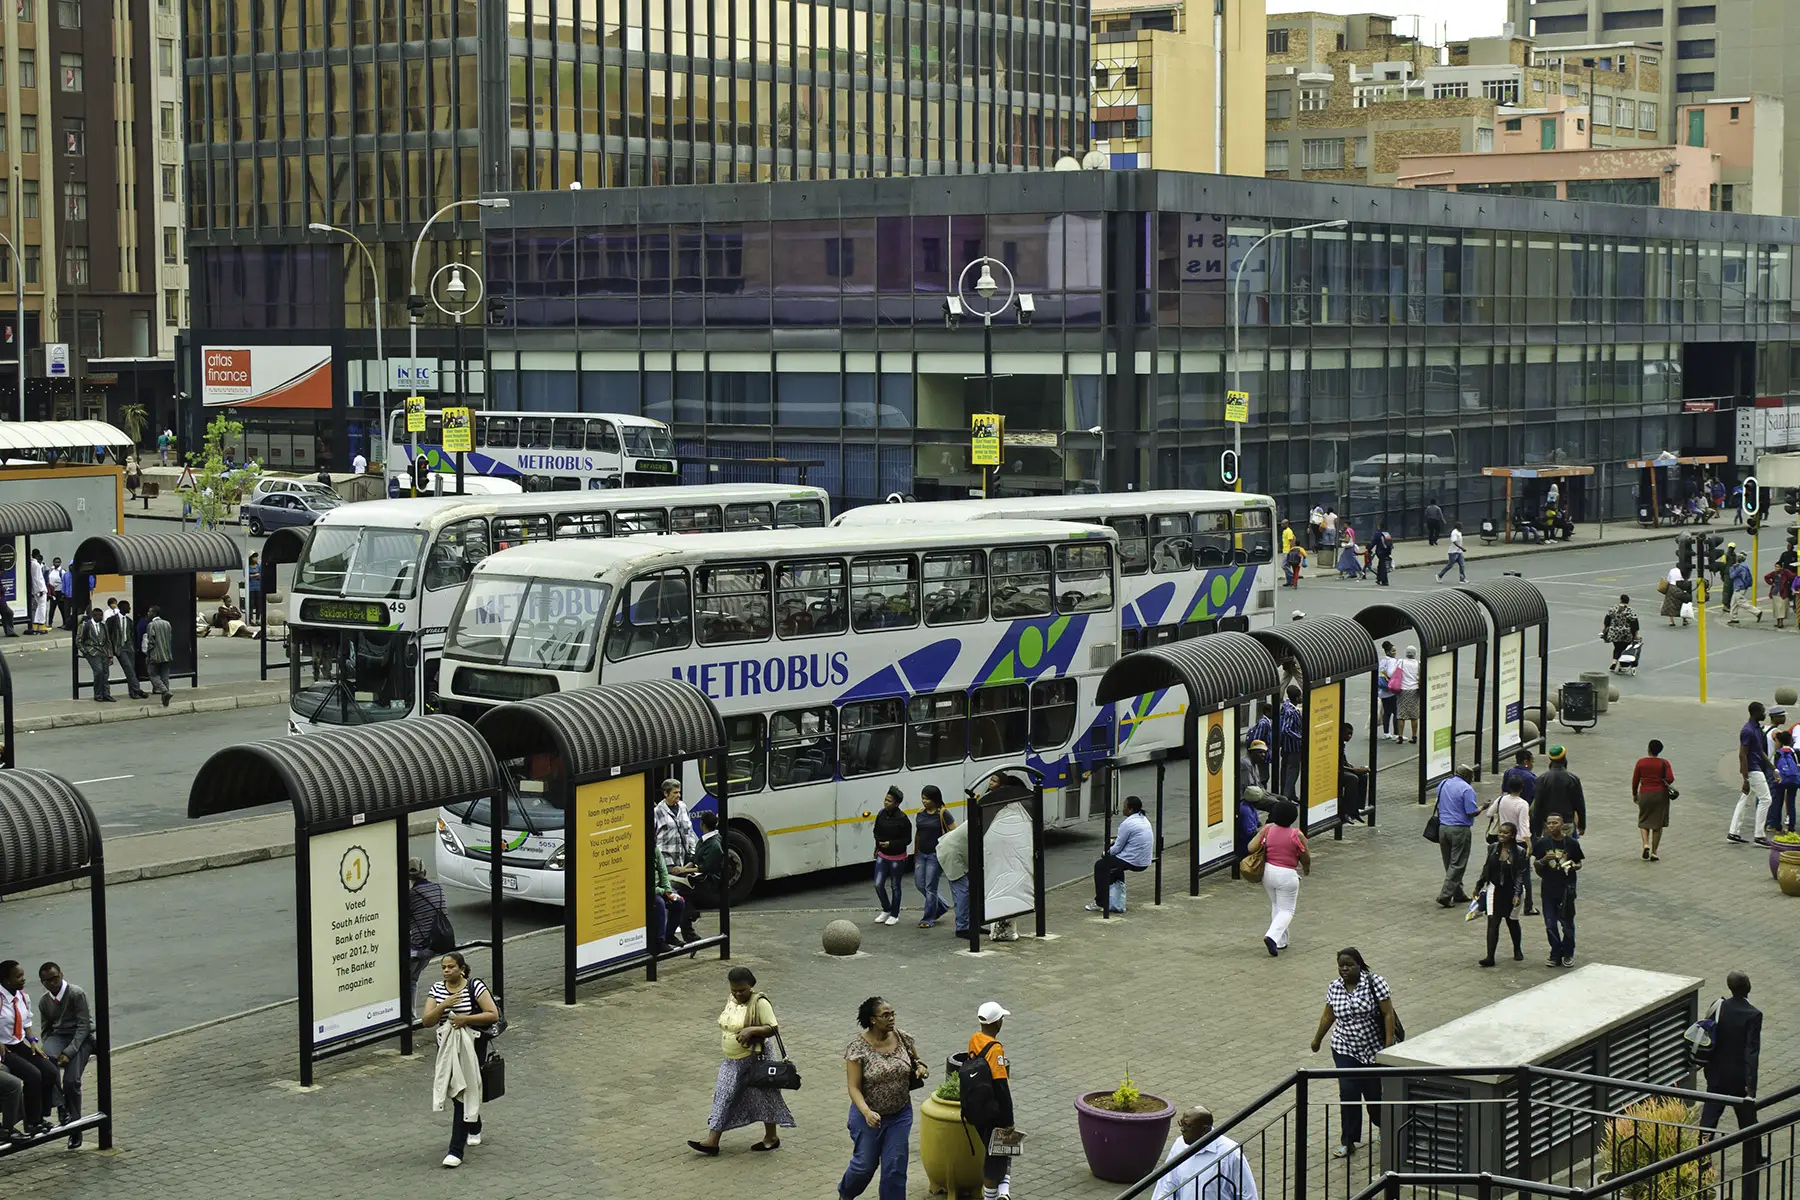 Buses at Gandhi Square in Johannesburg